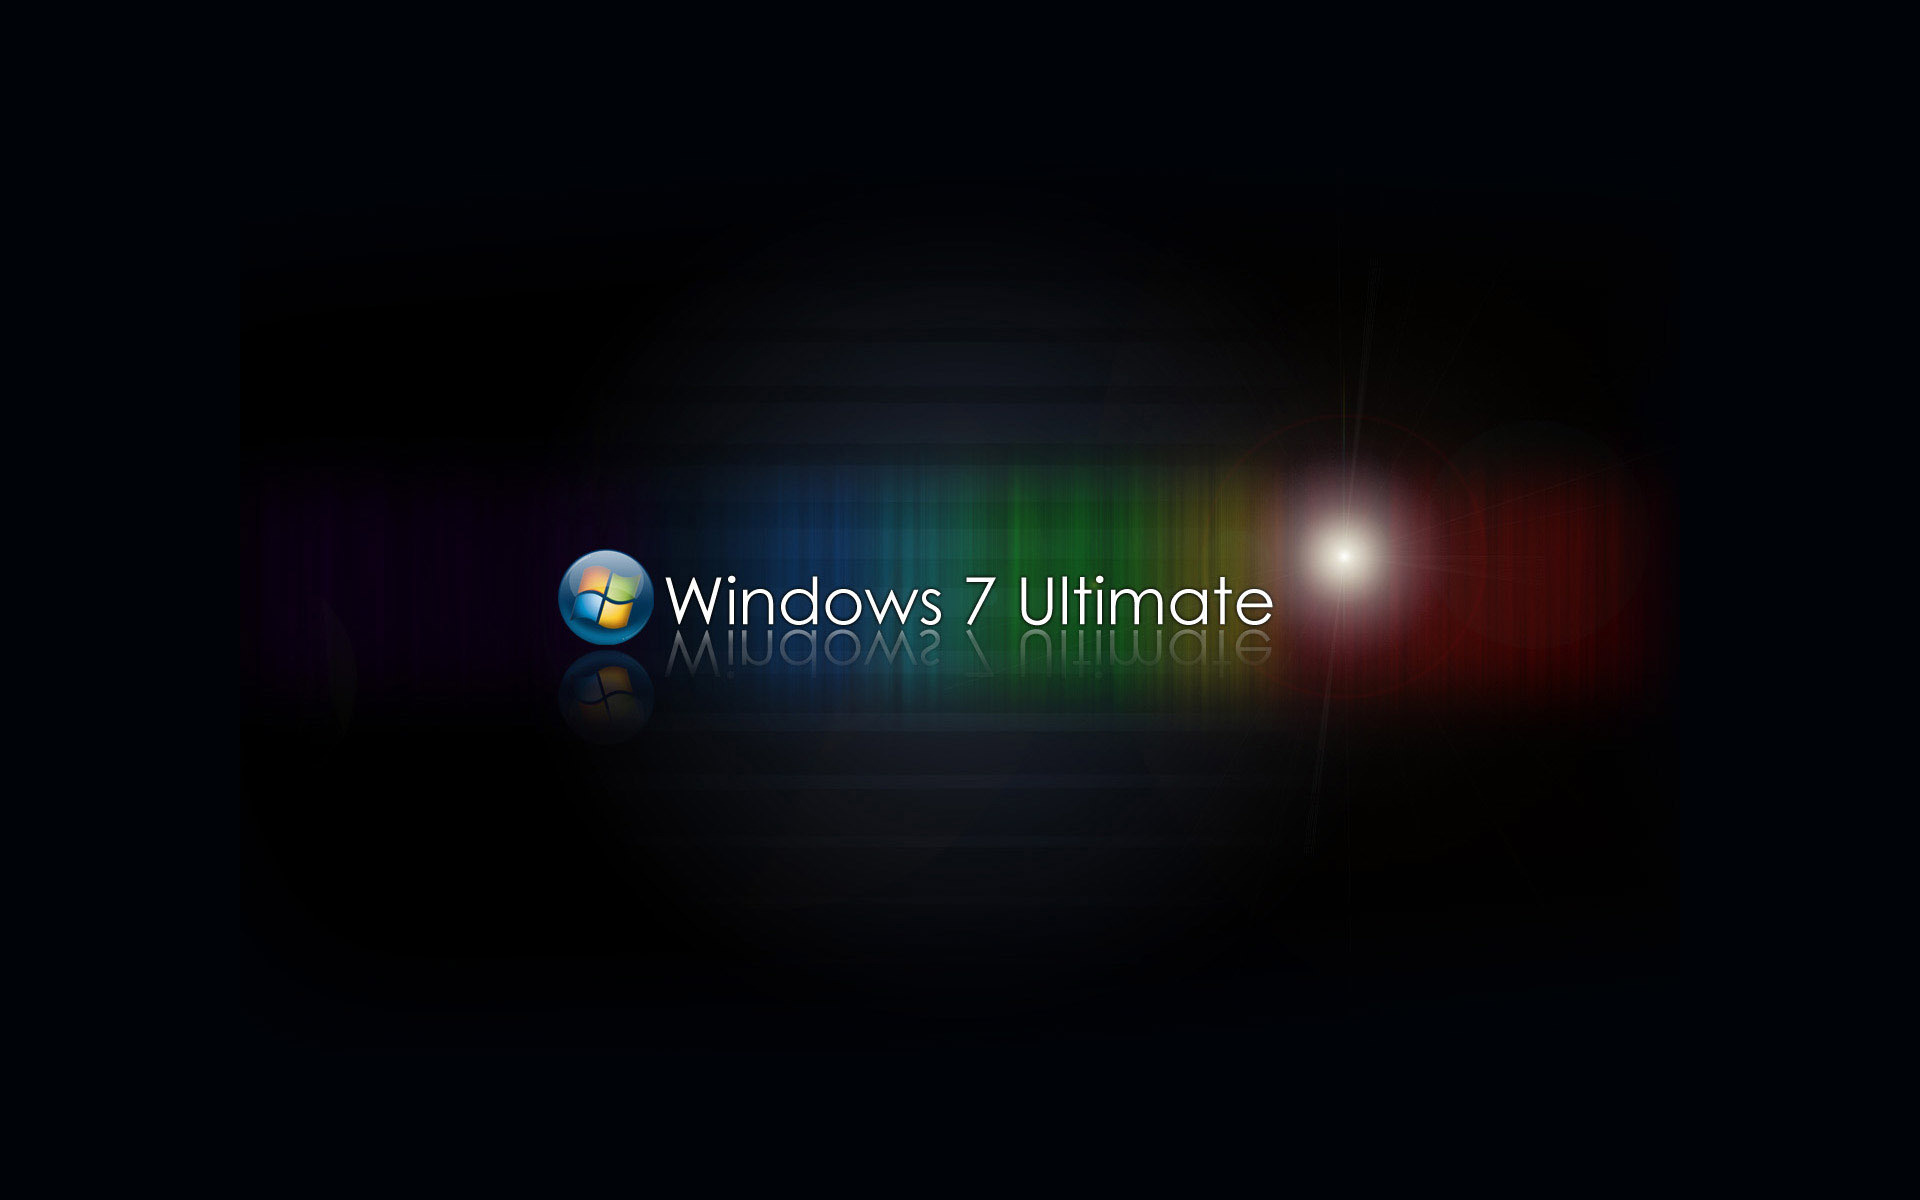 Windows 7 Ultimate Background 1200 X 900 Downloads